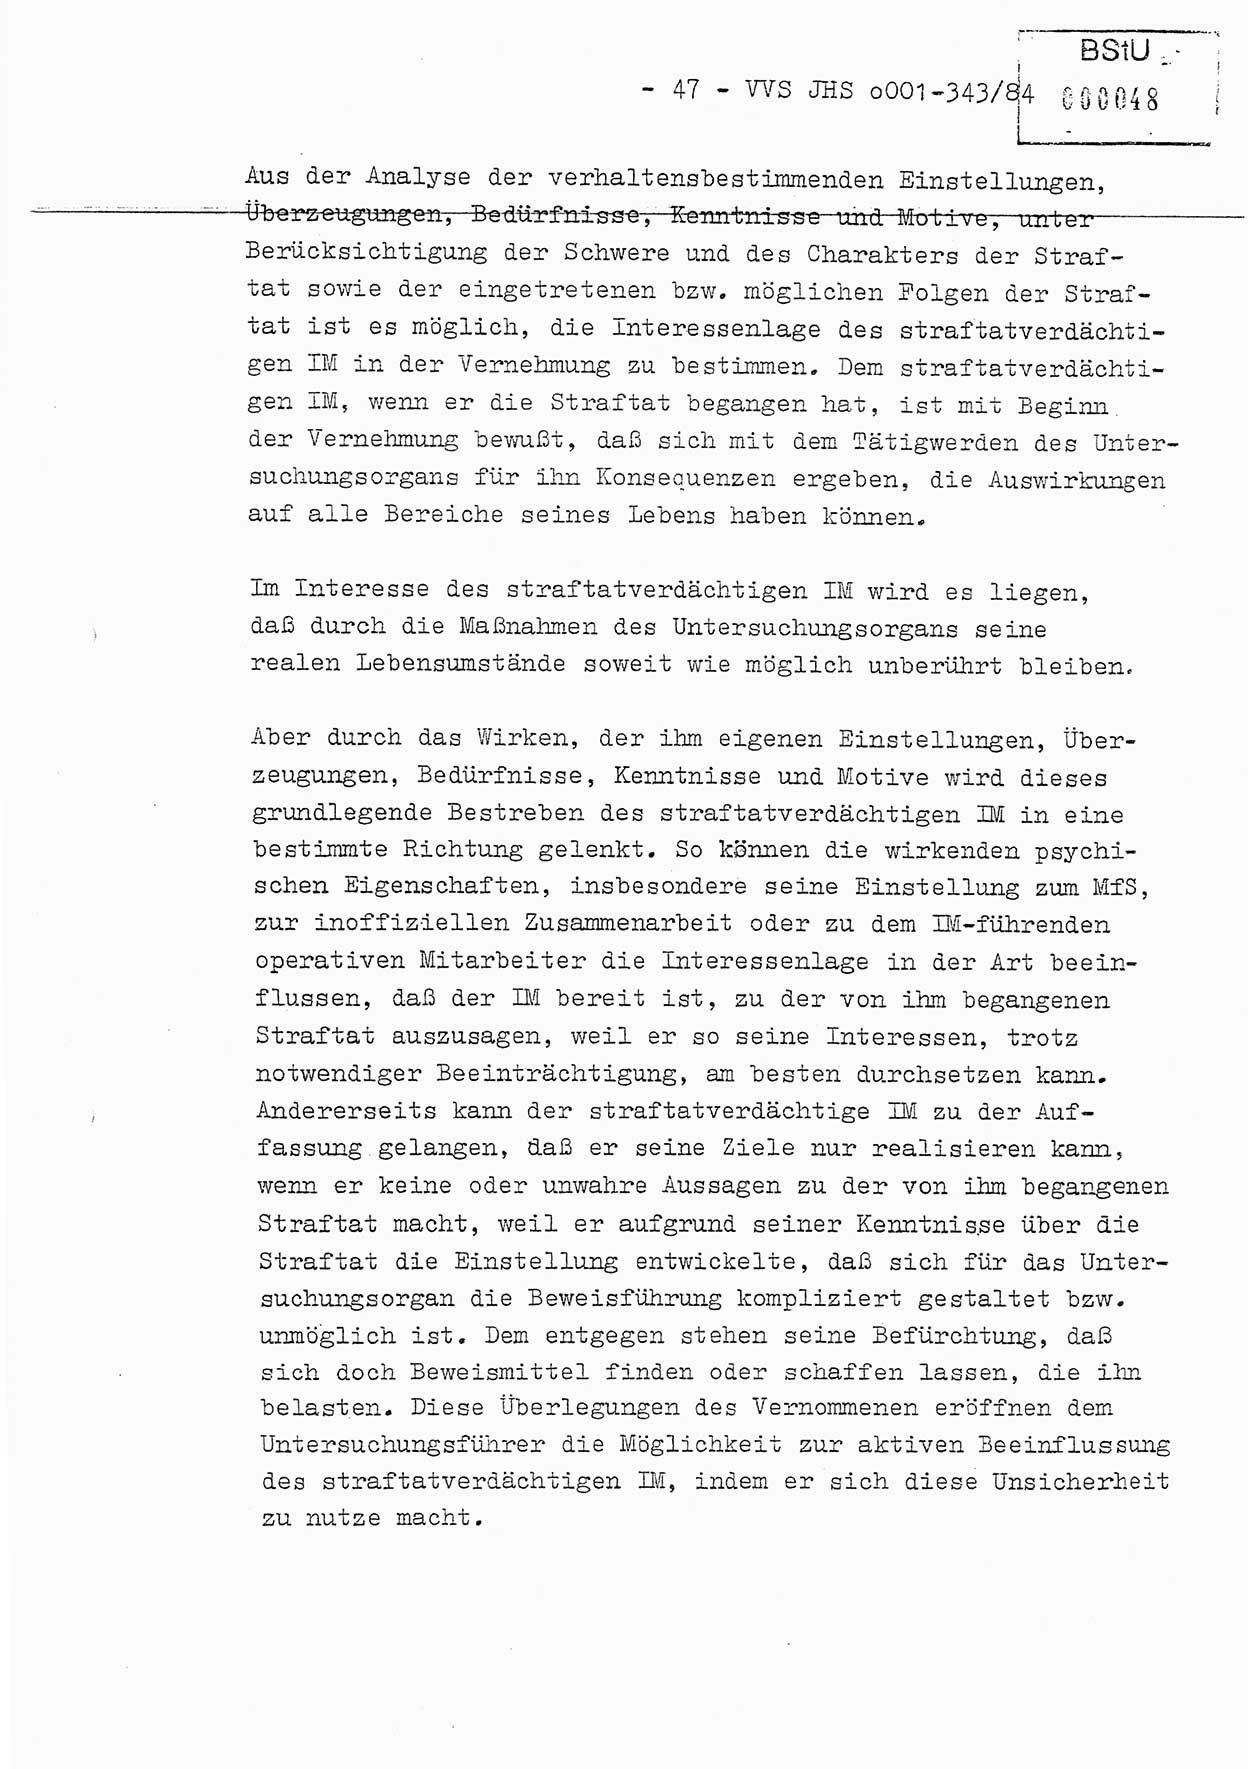 Diplomarbeit, Oberleutnant Bernd Michael (HA Ⅸ/5), Oberleutnant Peter Felber (HA IX/5), Ministerium für Staatssicherheit (MfS) [Deutsche Demokratische Republik (DDR)], Juristische Hochschule (JHS), Vertrauliche Verschlußsache (VVS) o001-343/84, Potsdam 1985, Seite 47 (Dipl.-Arb. MfS DDR JHS VVS o001-343/84 1985, S. 47)